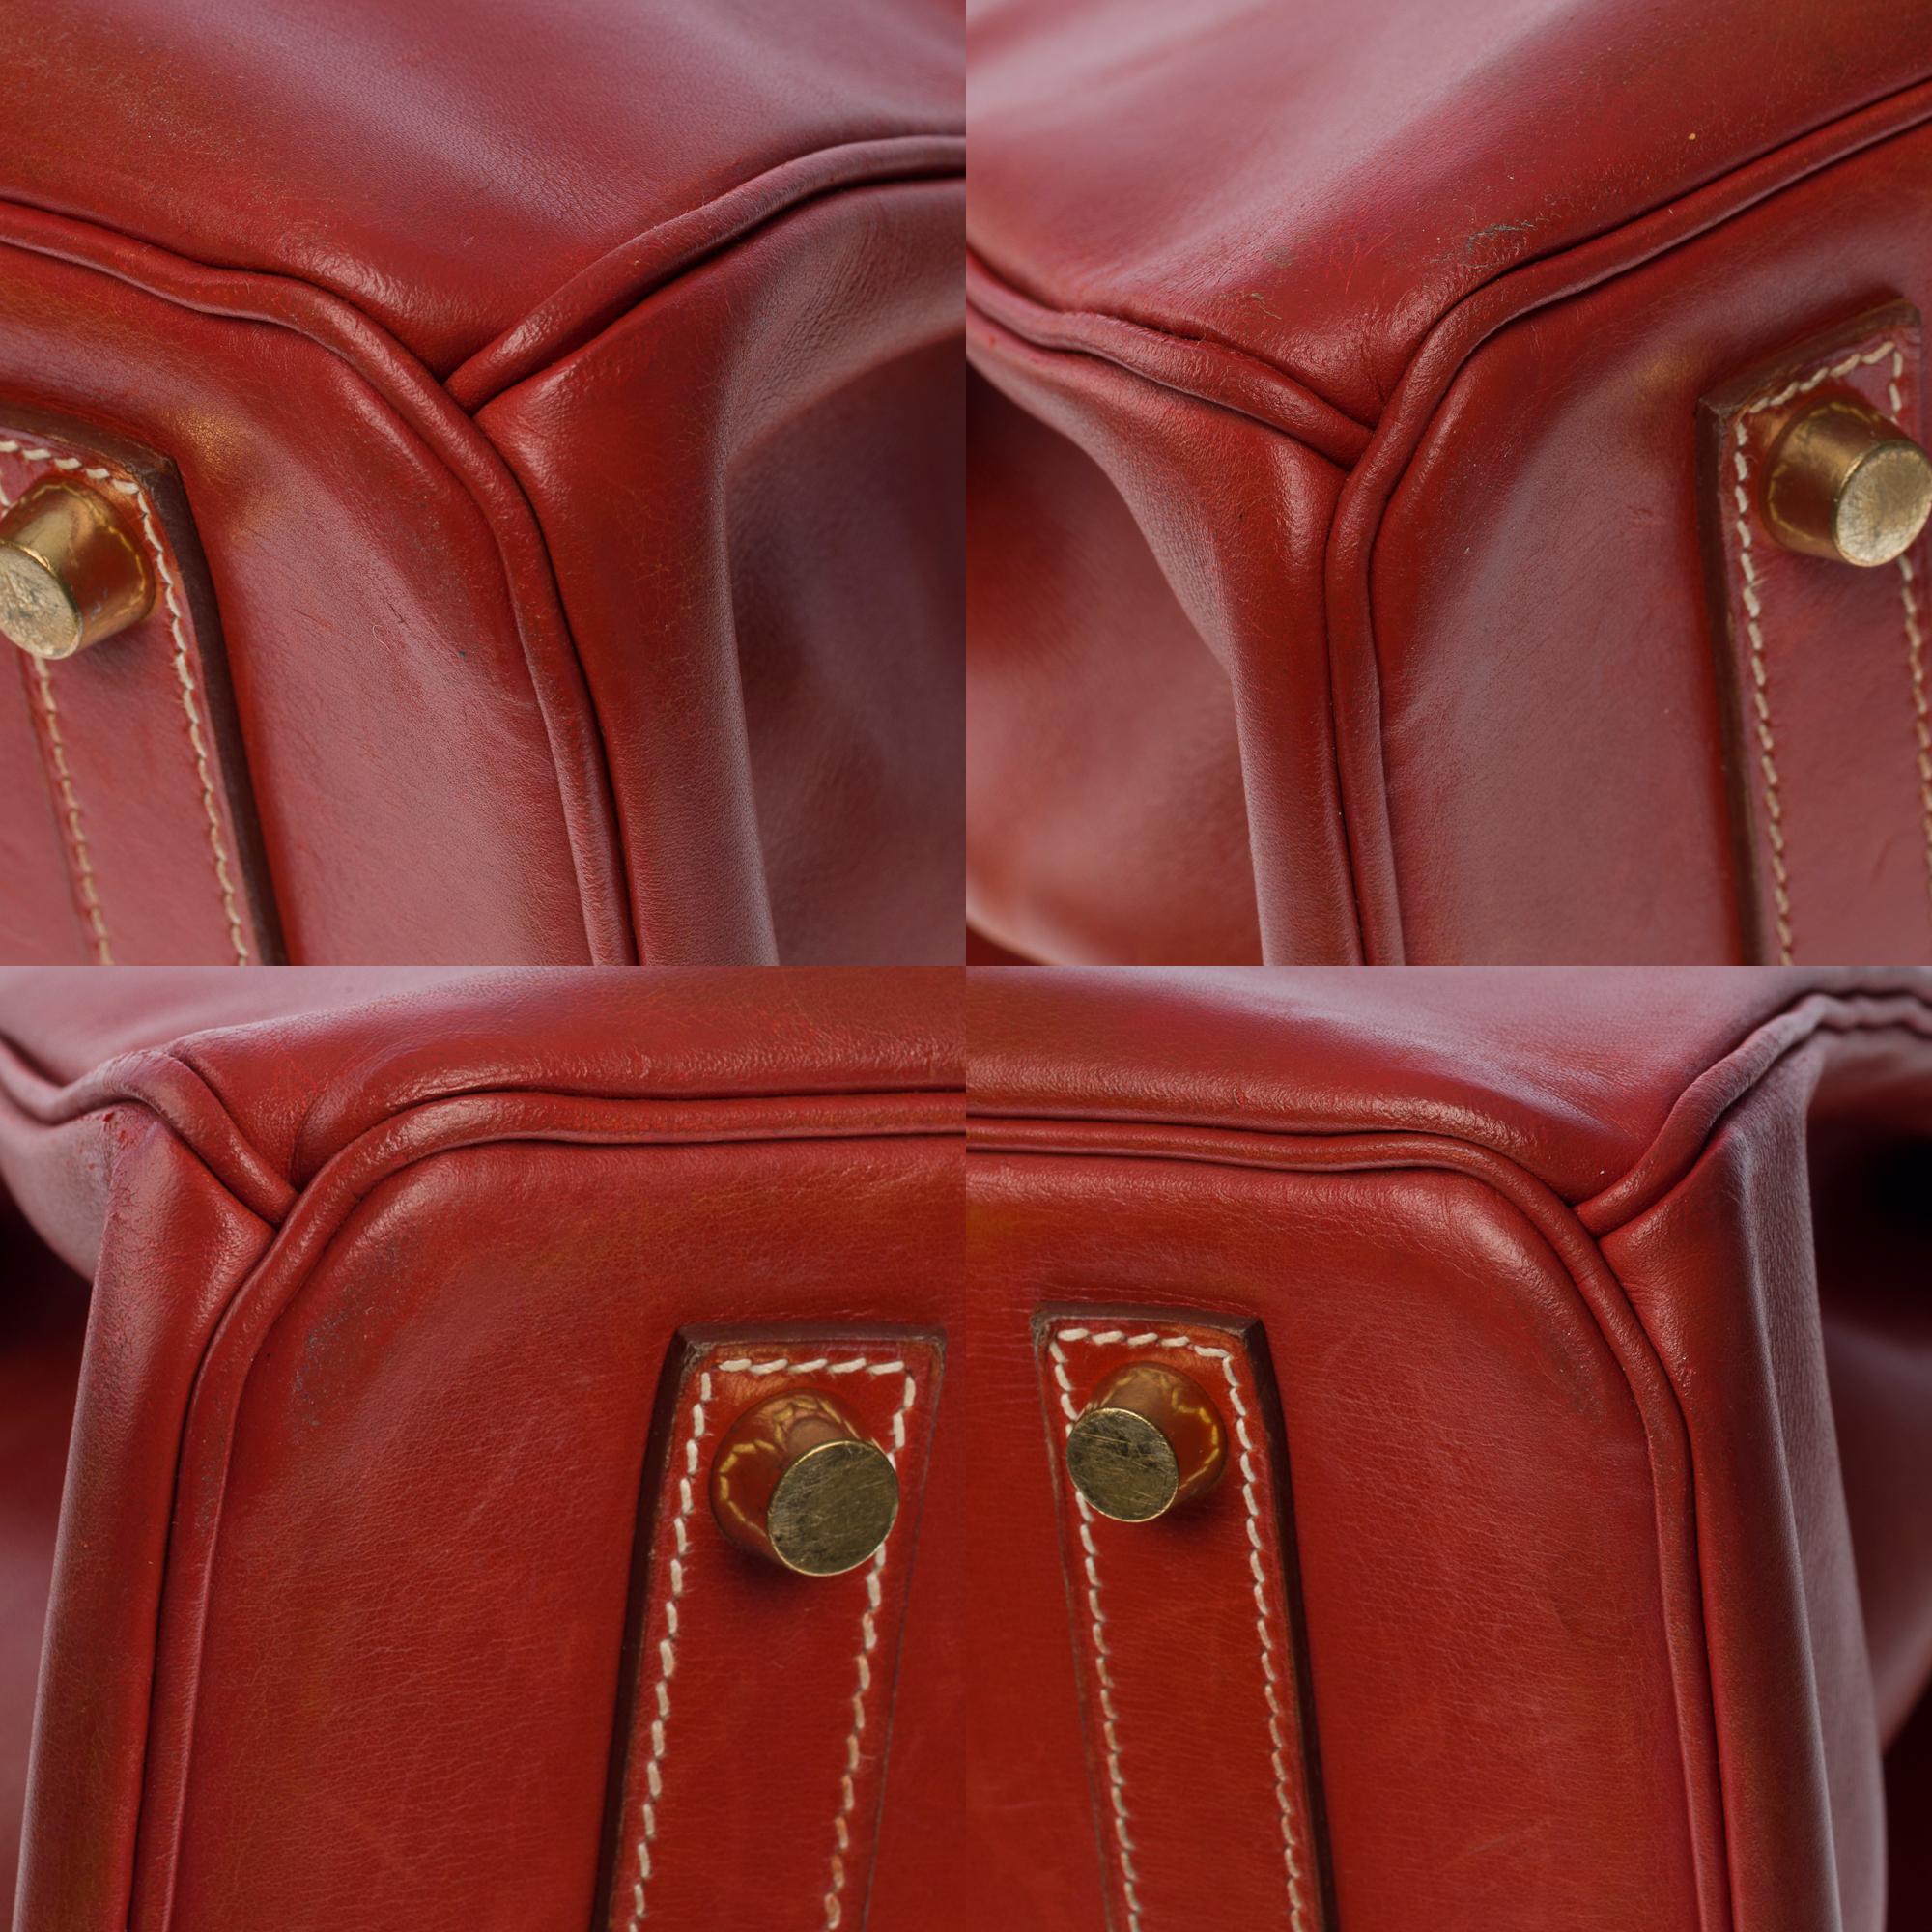 Amazing & Rare Hermès Birkin 35 handbag in Cognac box calfskin leather, GHW 6